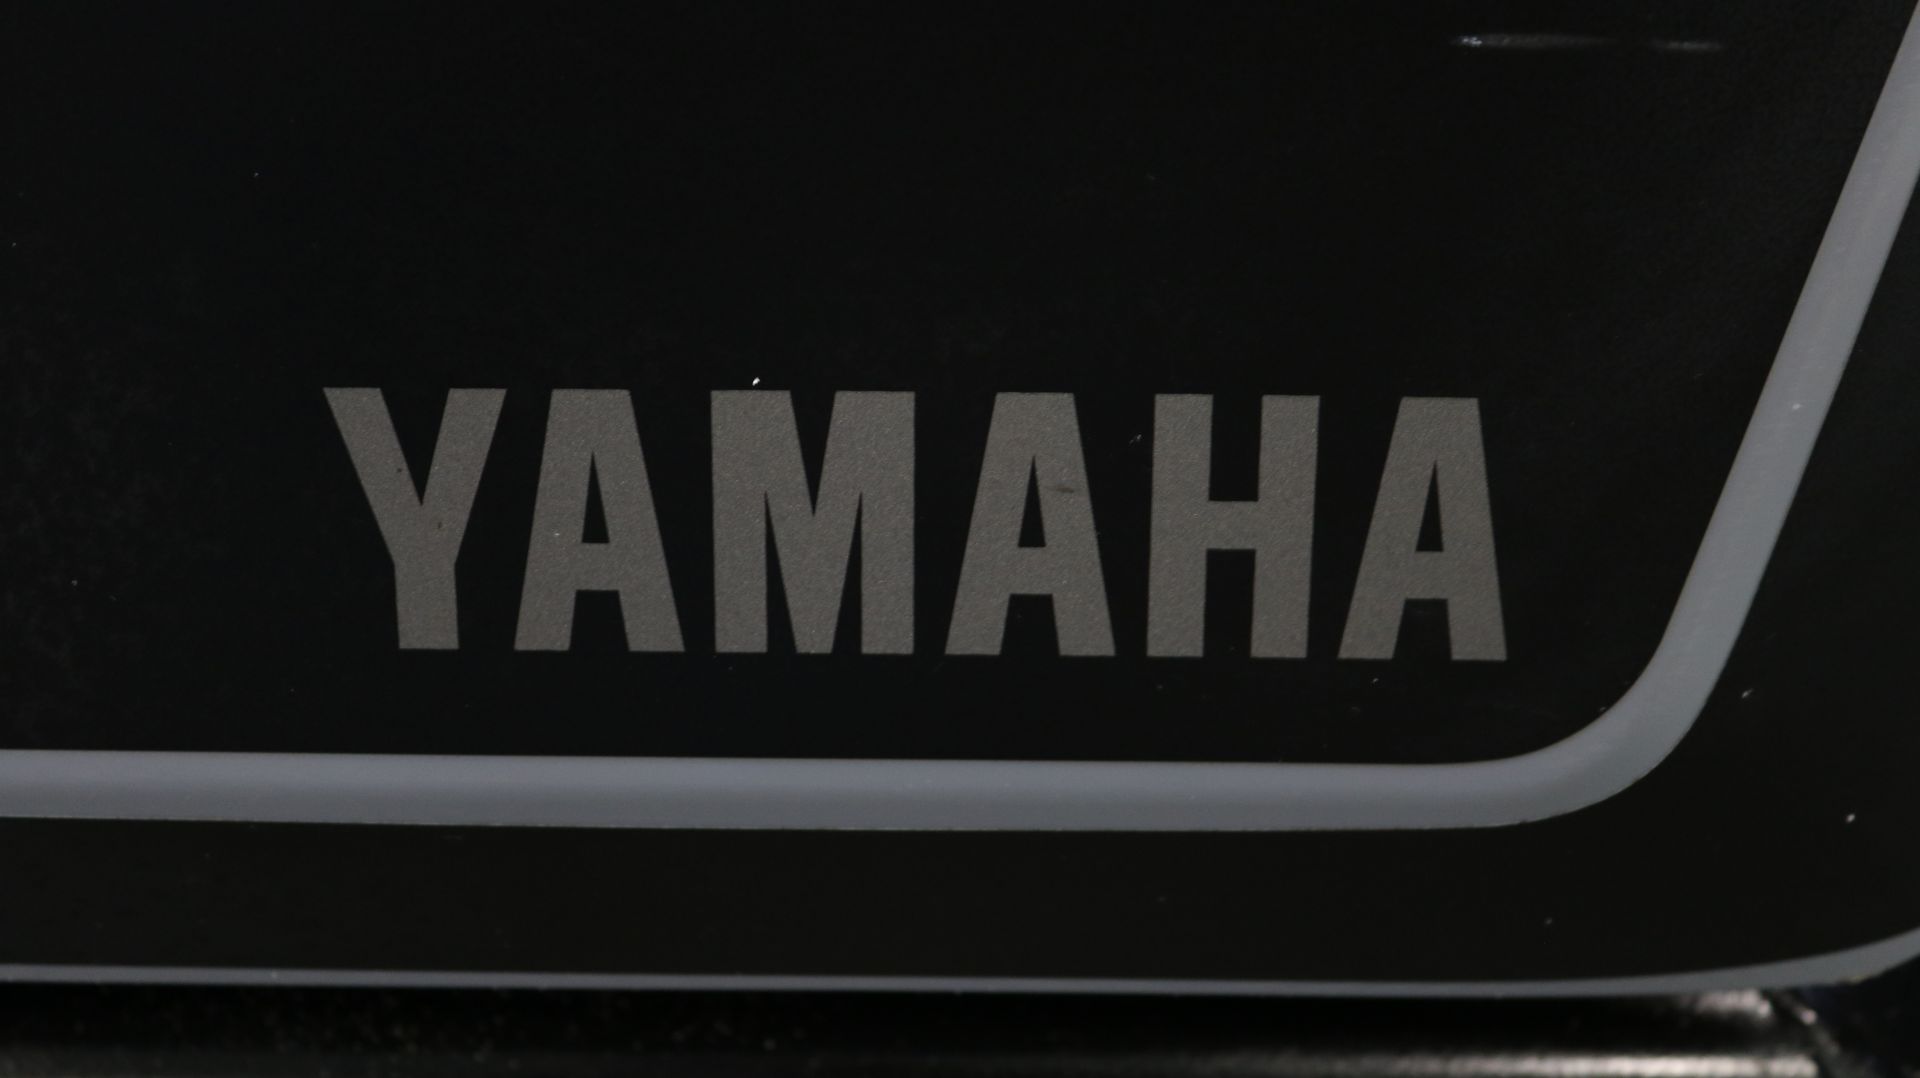 2022 Yamaha Wolverine X2 850 R-Spec in Ames, Iowa - Photo 14